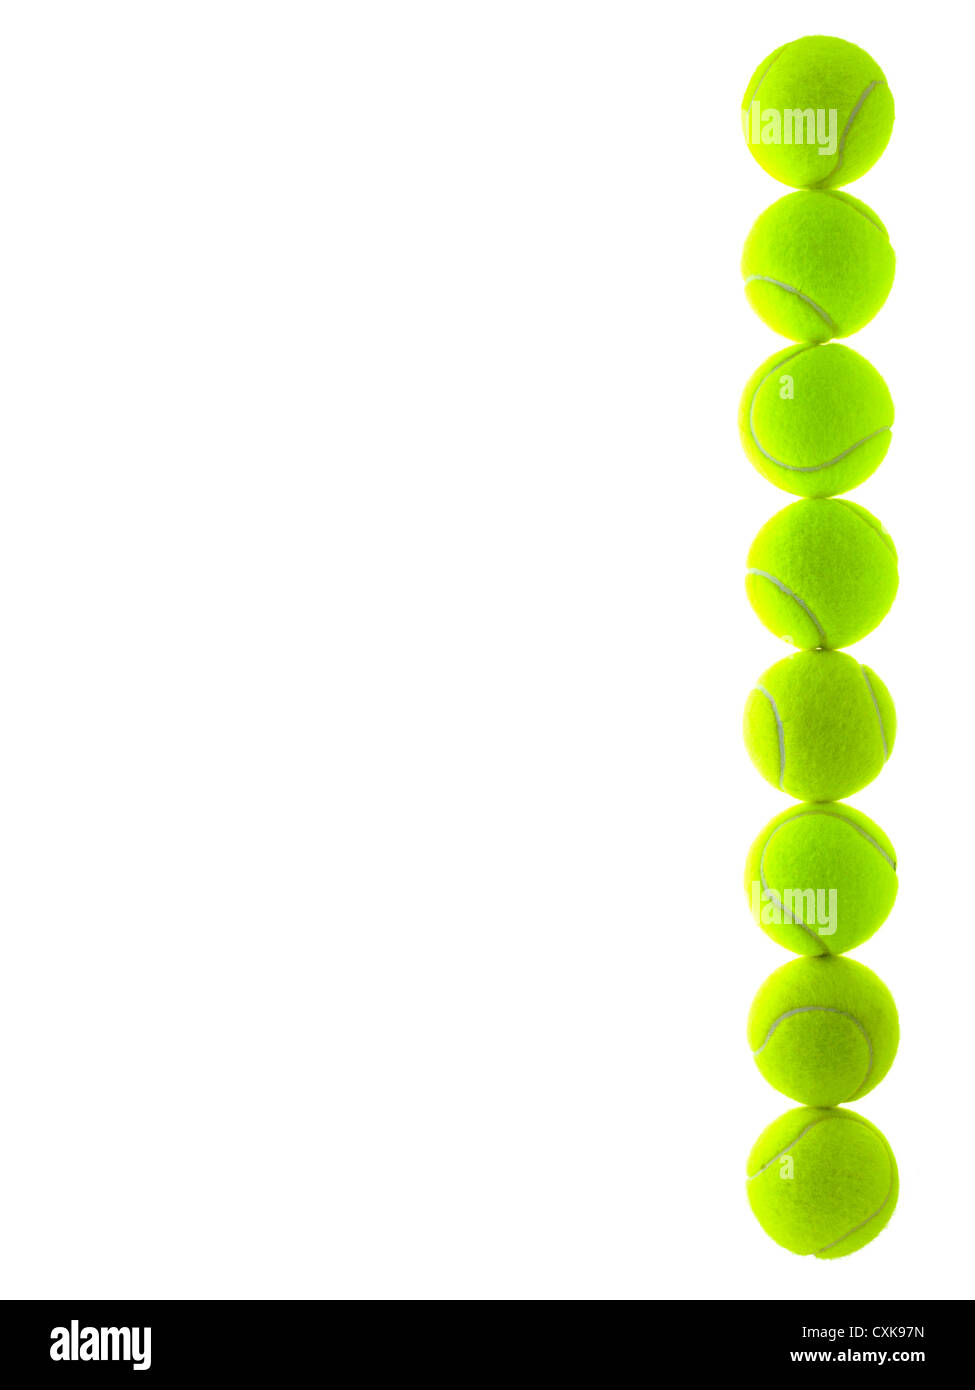 tennis balls Stock Photo